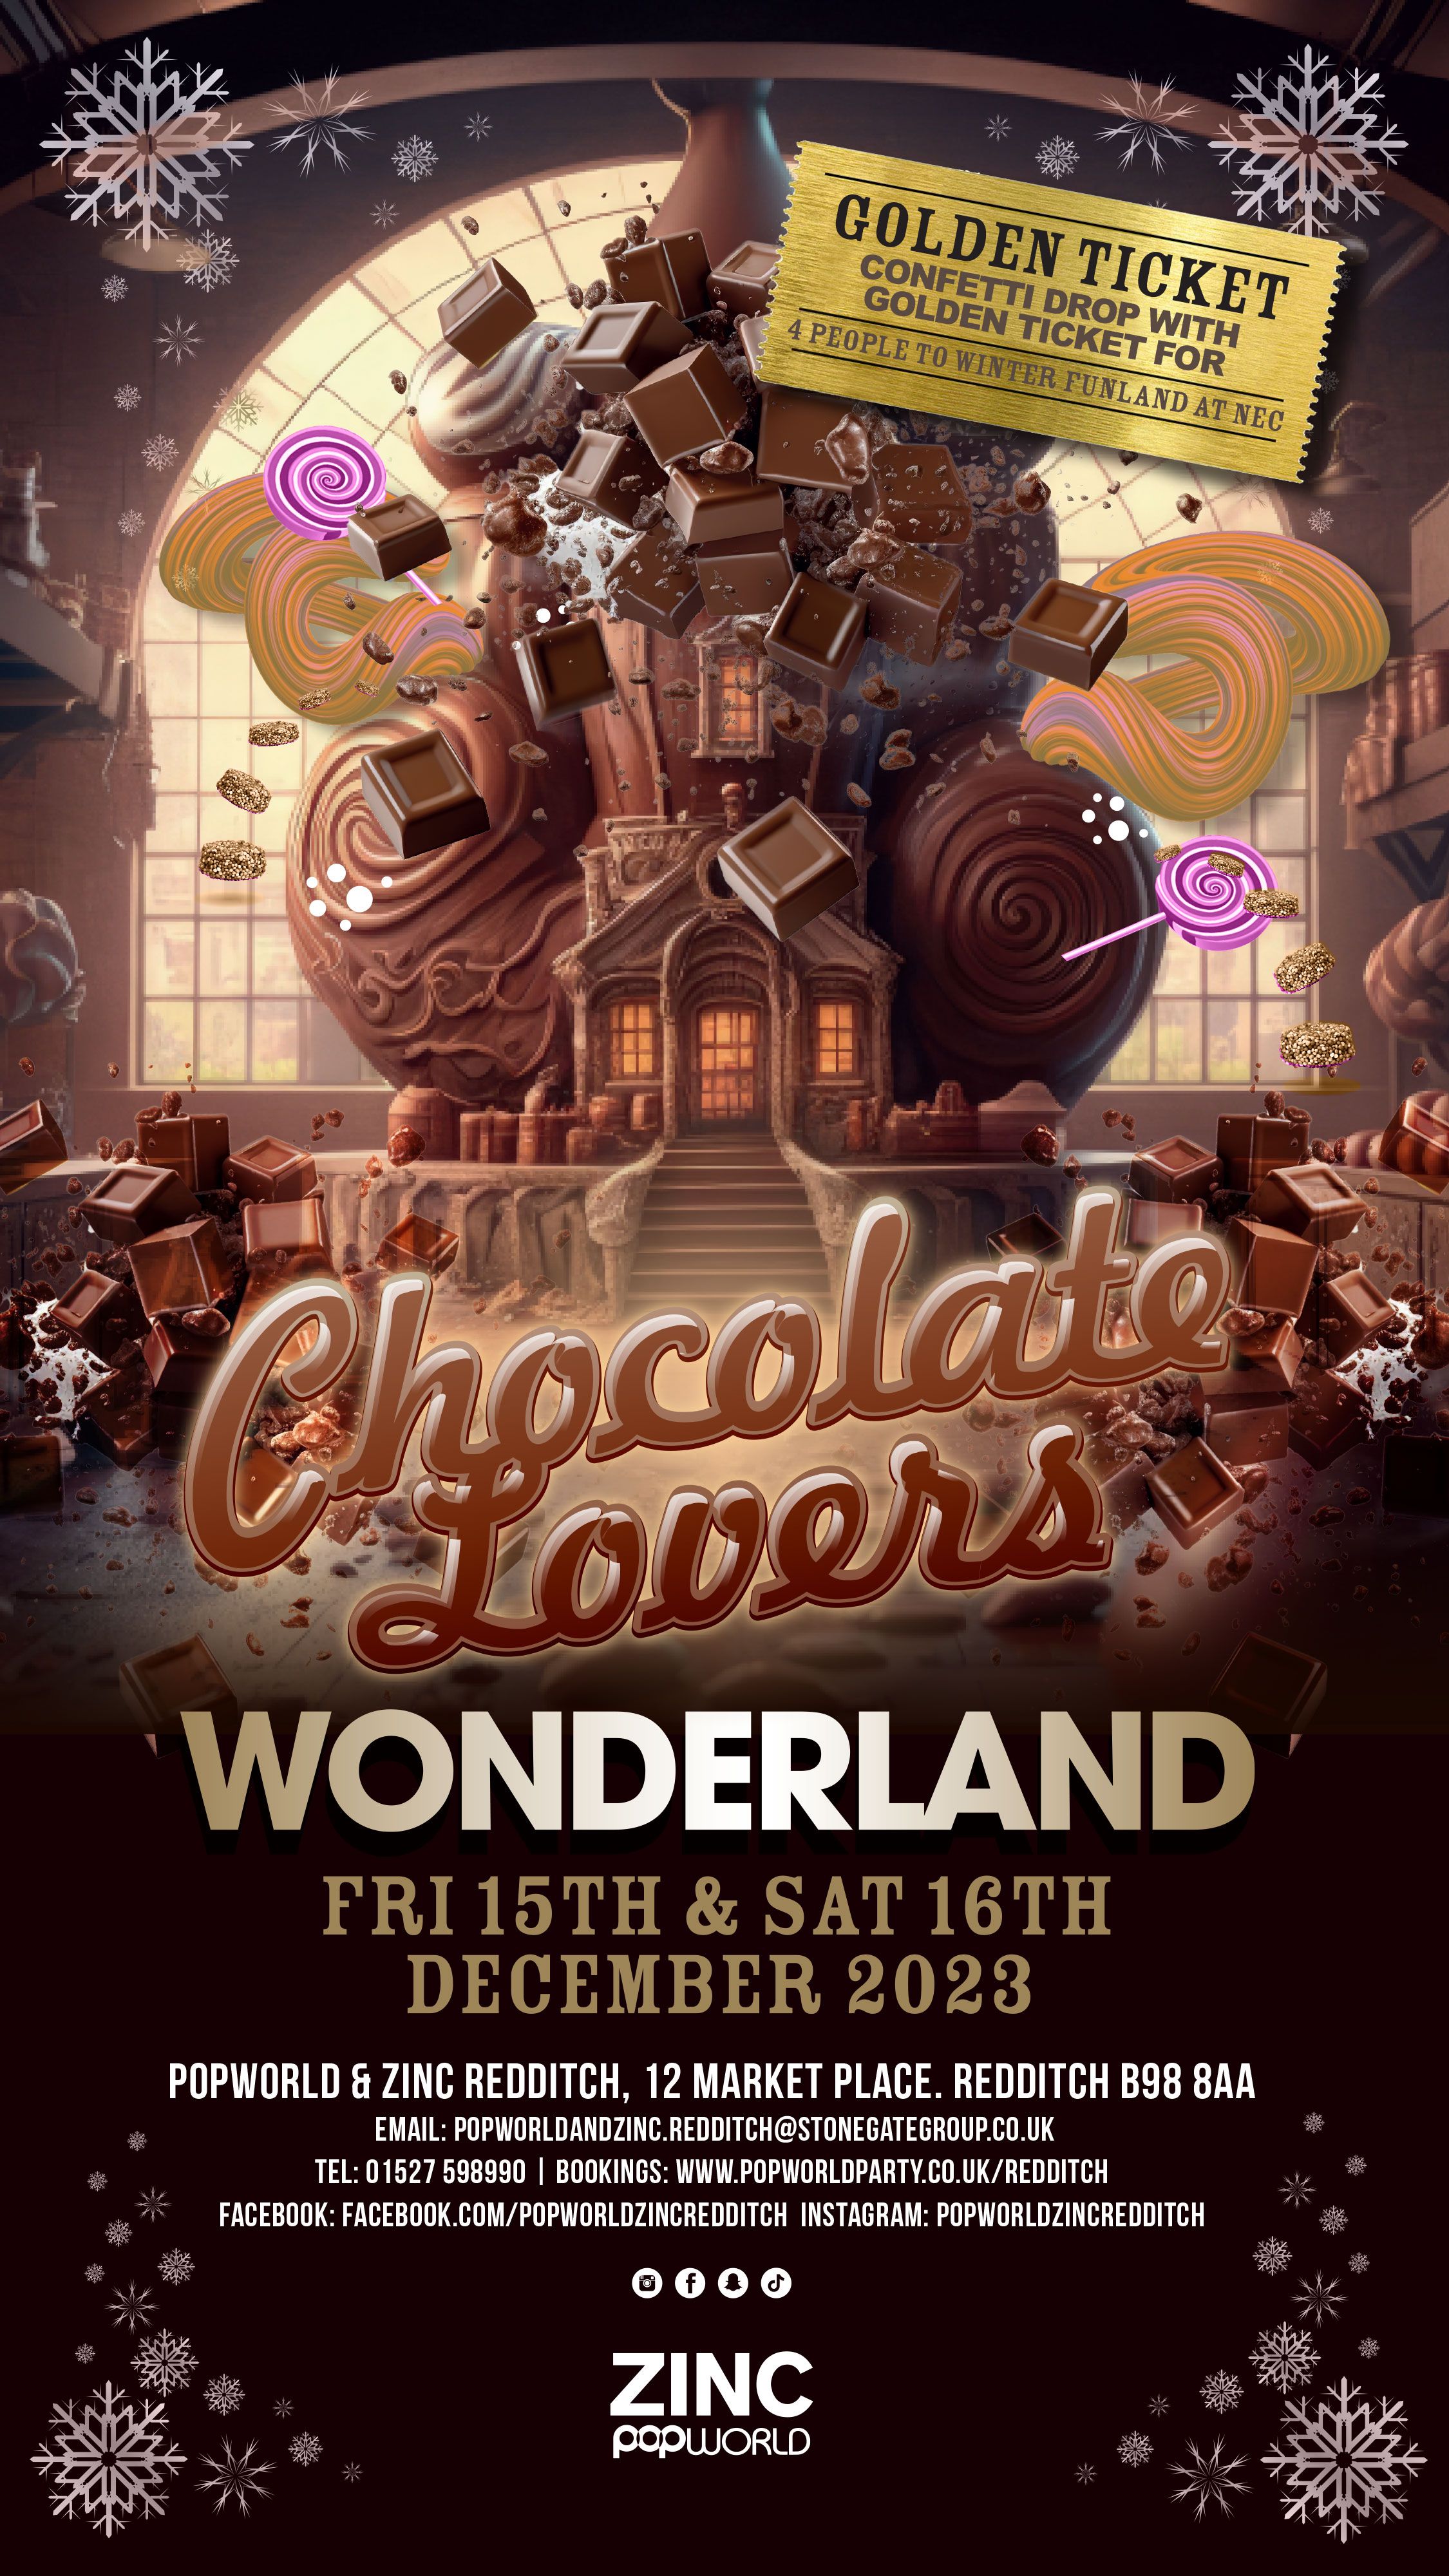 Chocolate Lovers Wonderland